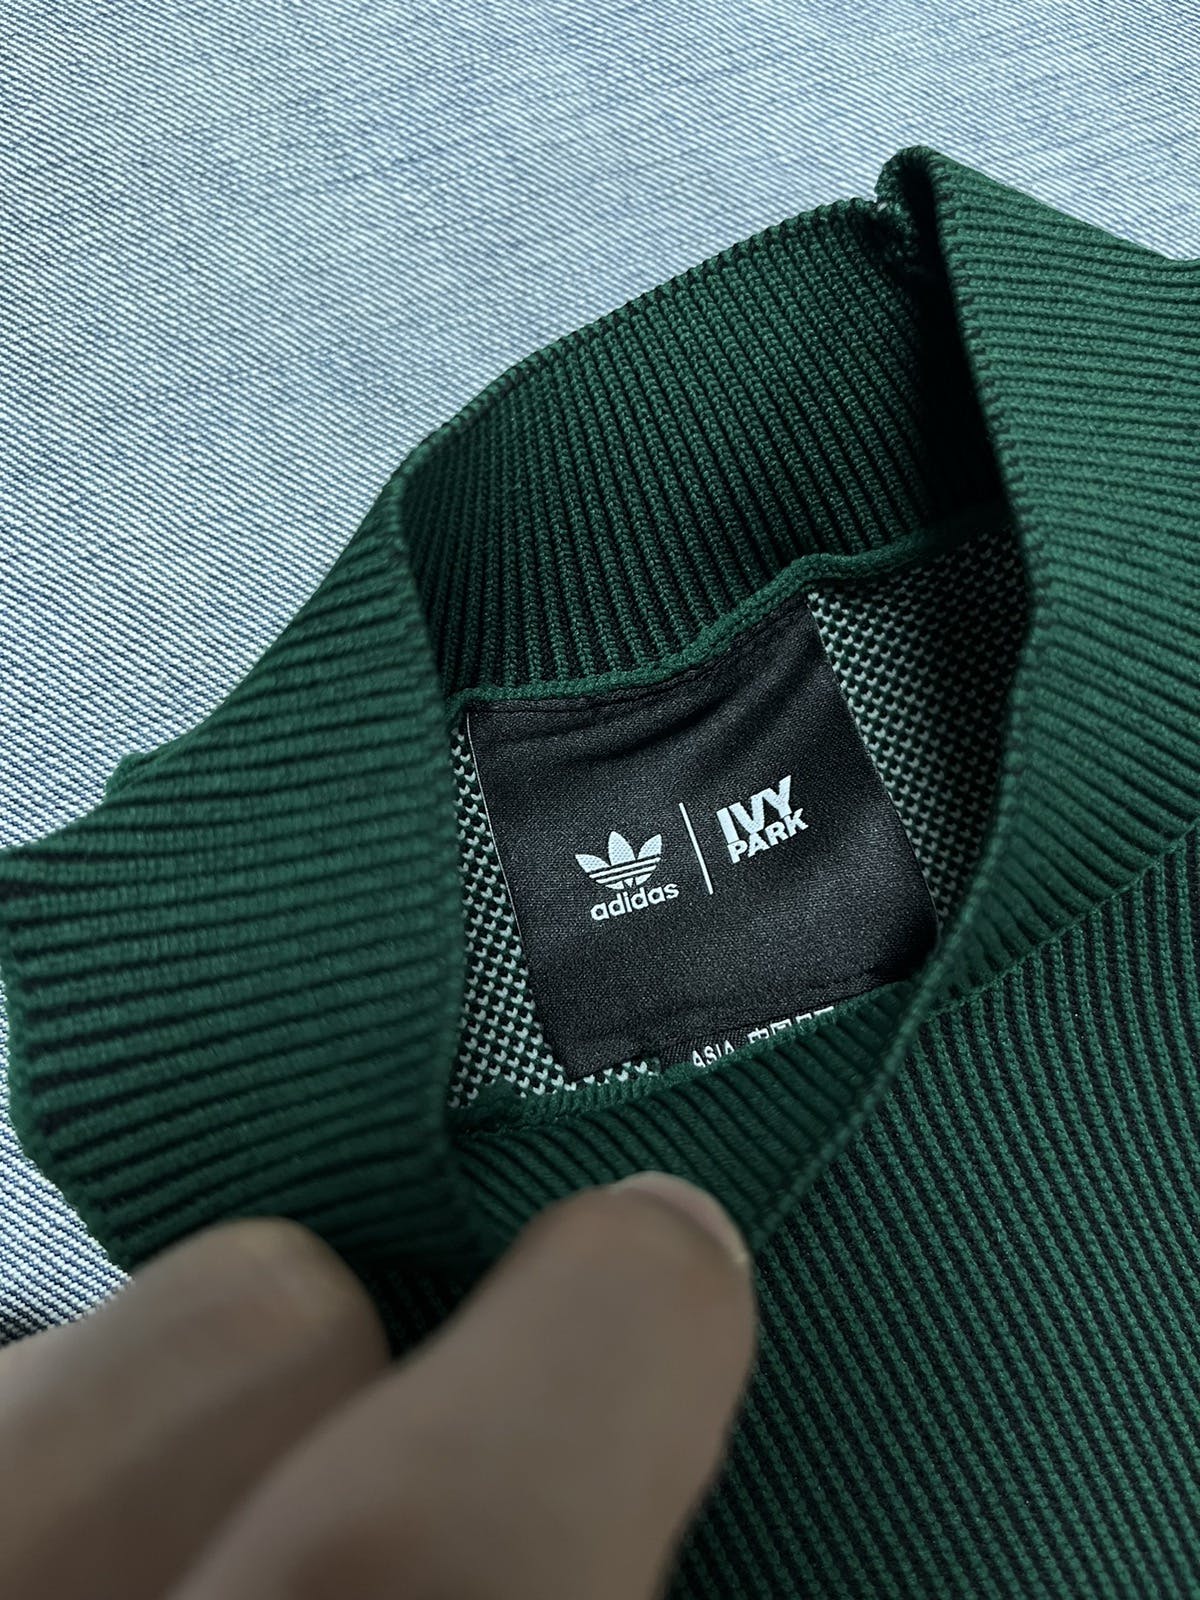 Adidas Ivy Park Knit Logo Green Dress Small - 3